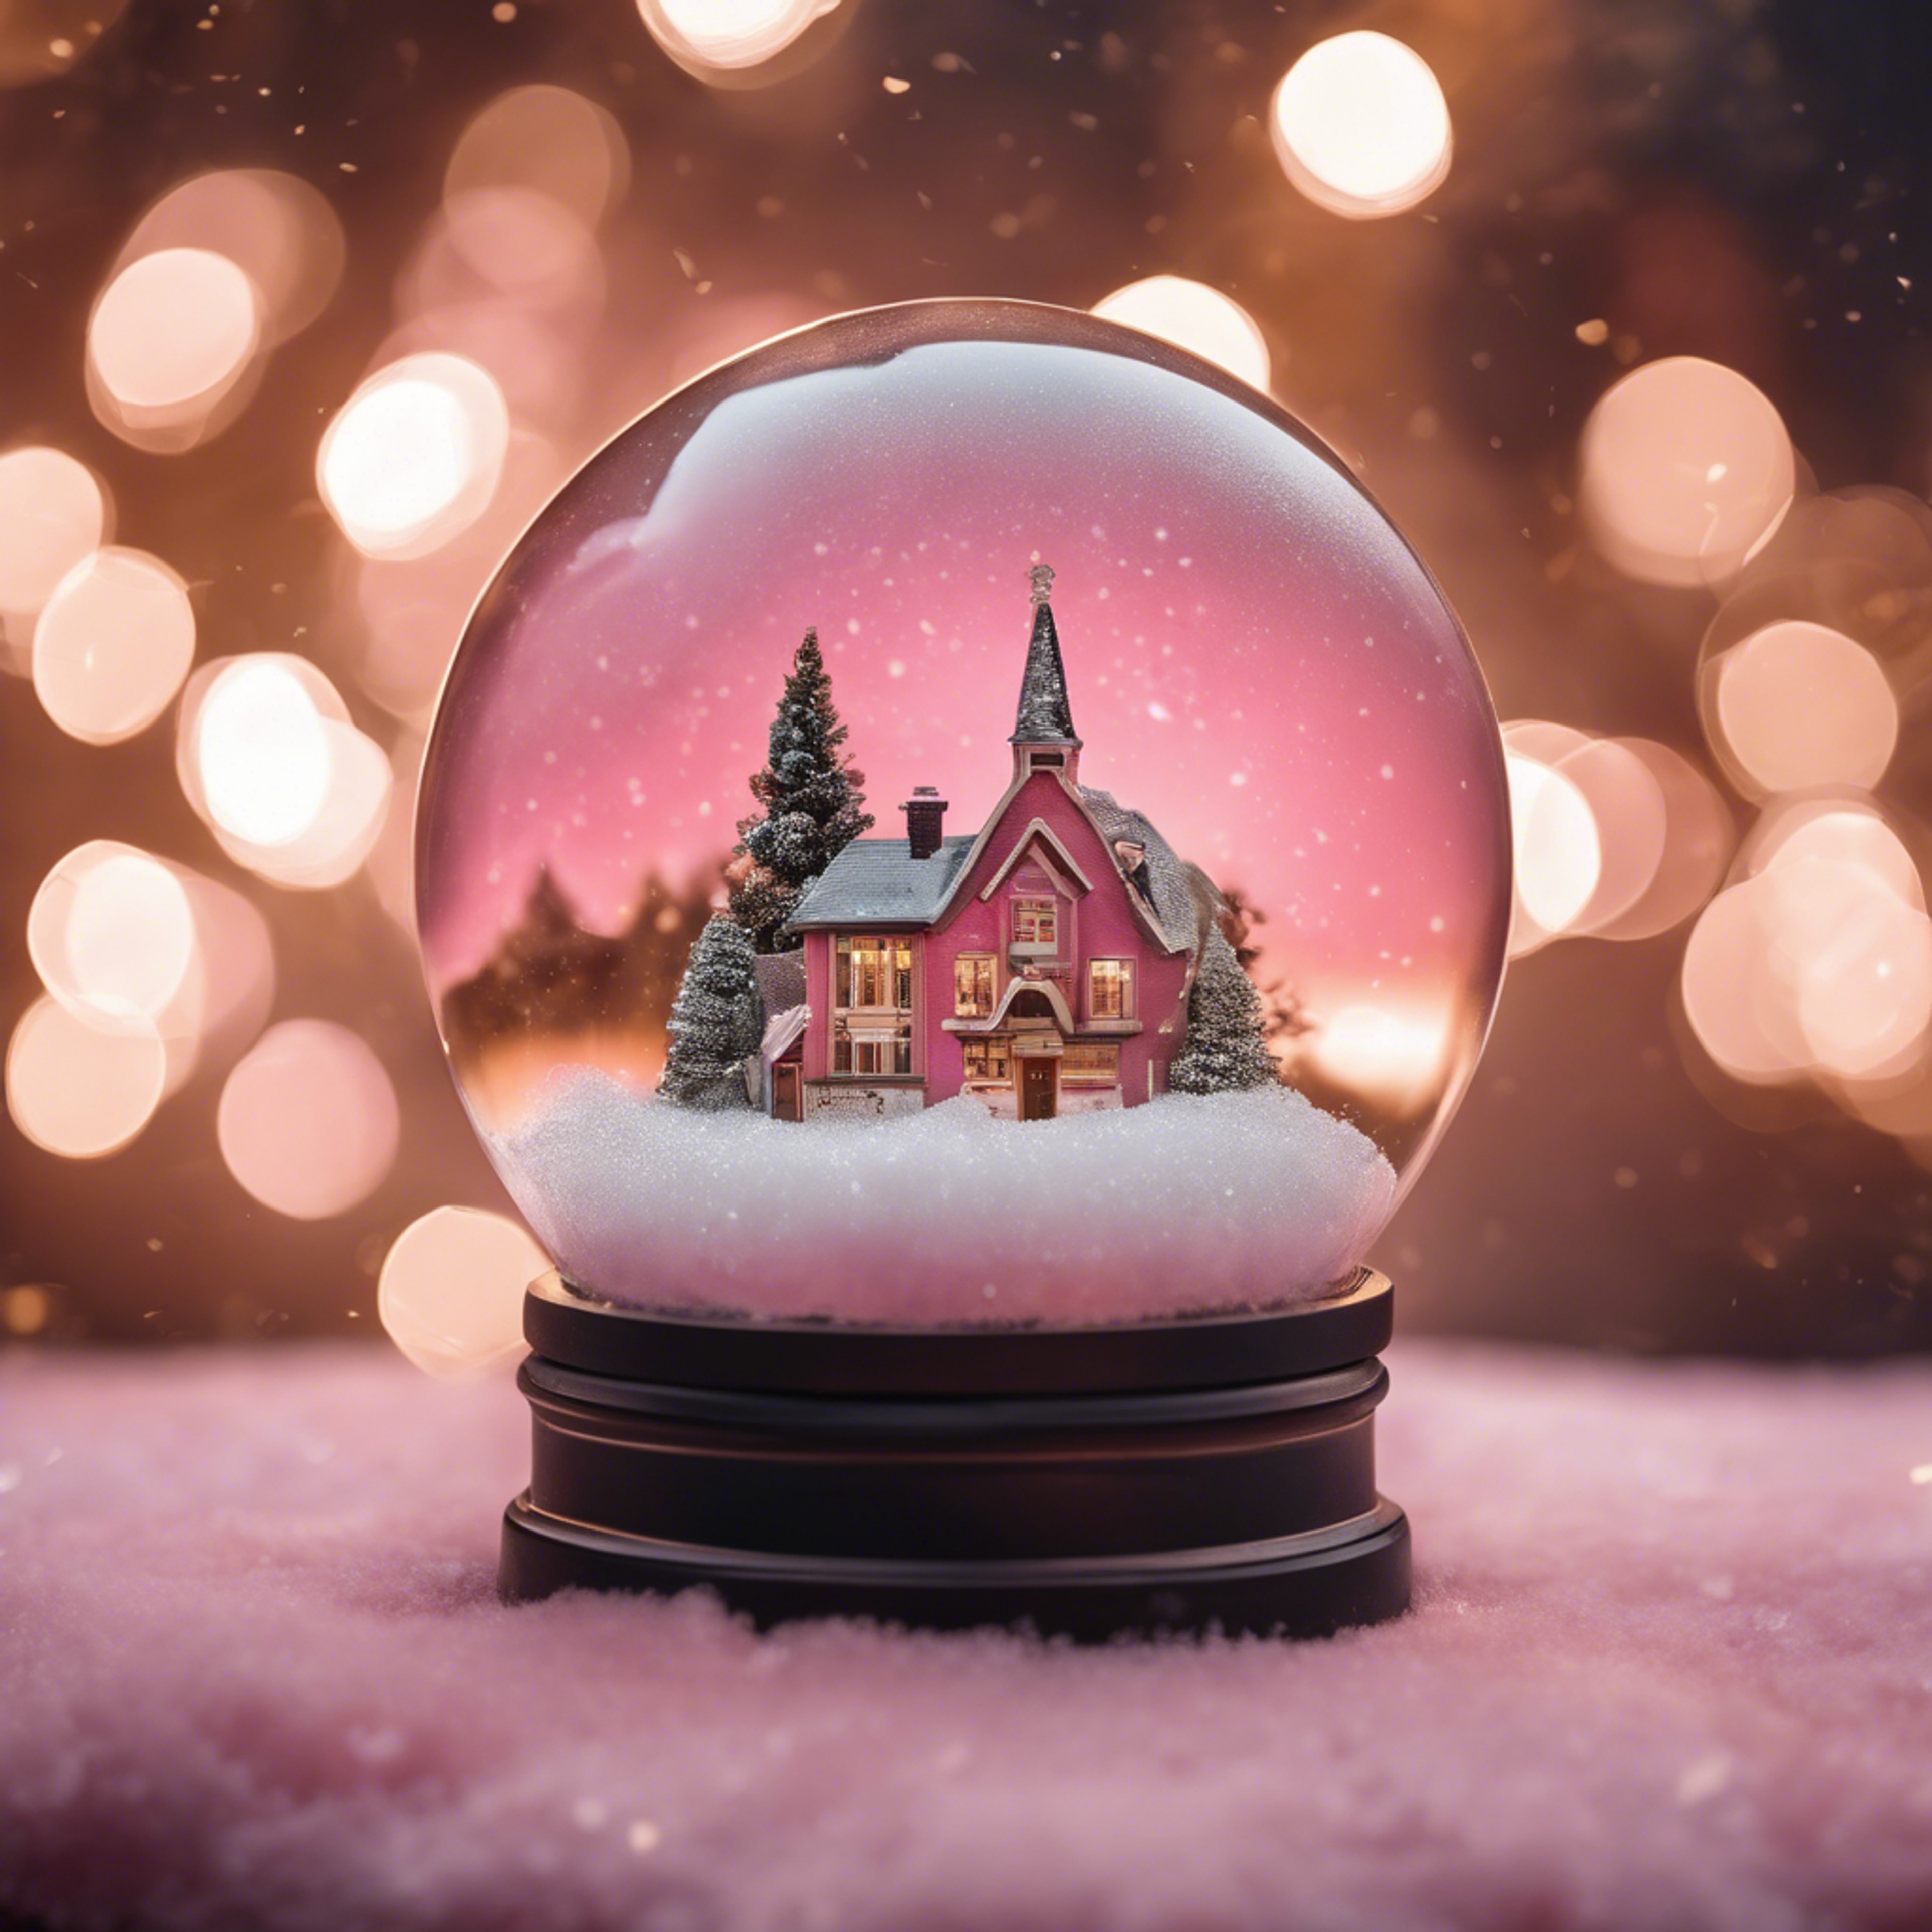 An enchanting snow globe revealing a quaint town under a pink Christmas sky. טפט[a24ac541fe61415897f7]